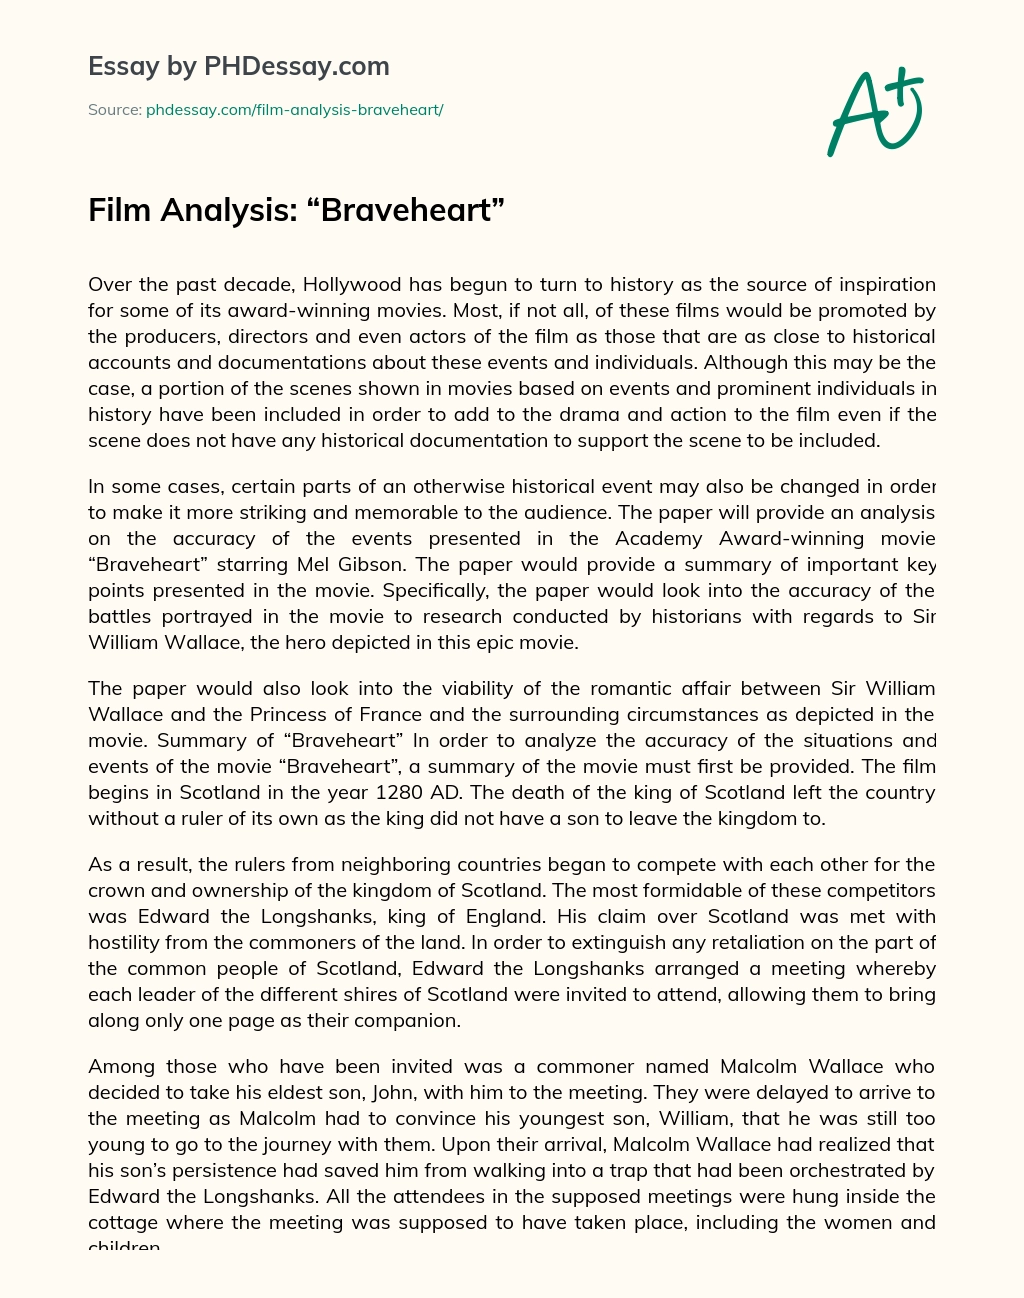 Film Analysis: “Braveheart” essay